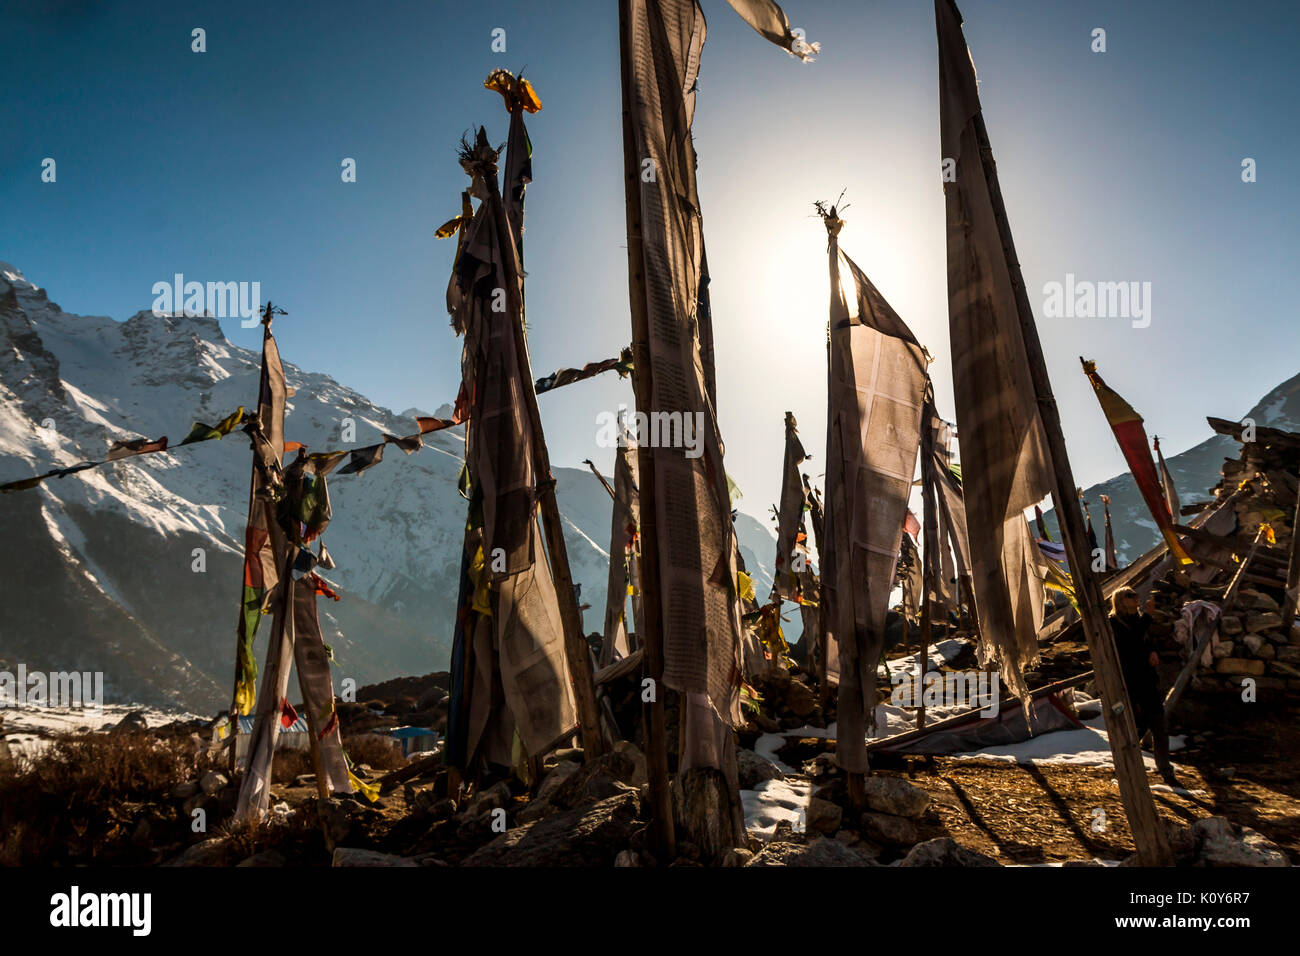 Prayer flags on the earthquake destroyed temple at Kyamjin Gumba, Langtang Valley, Rasuwa, Nepal Stock Photo